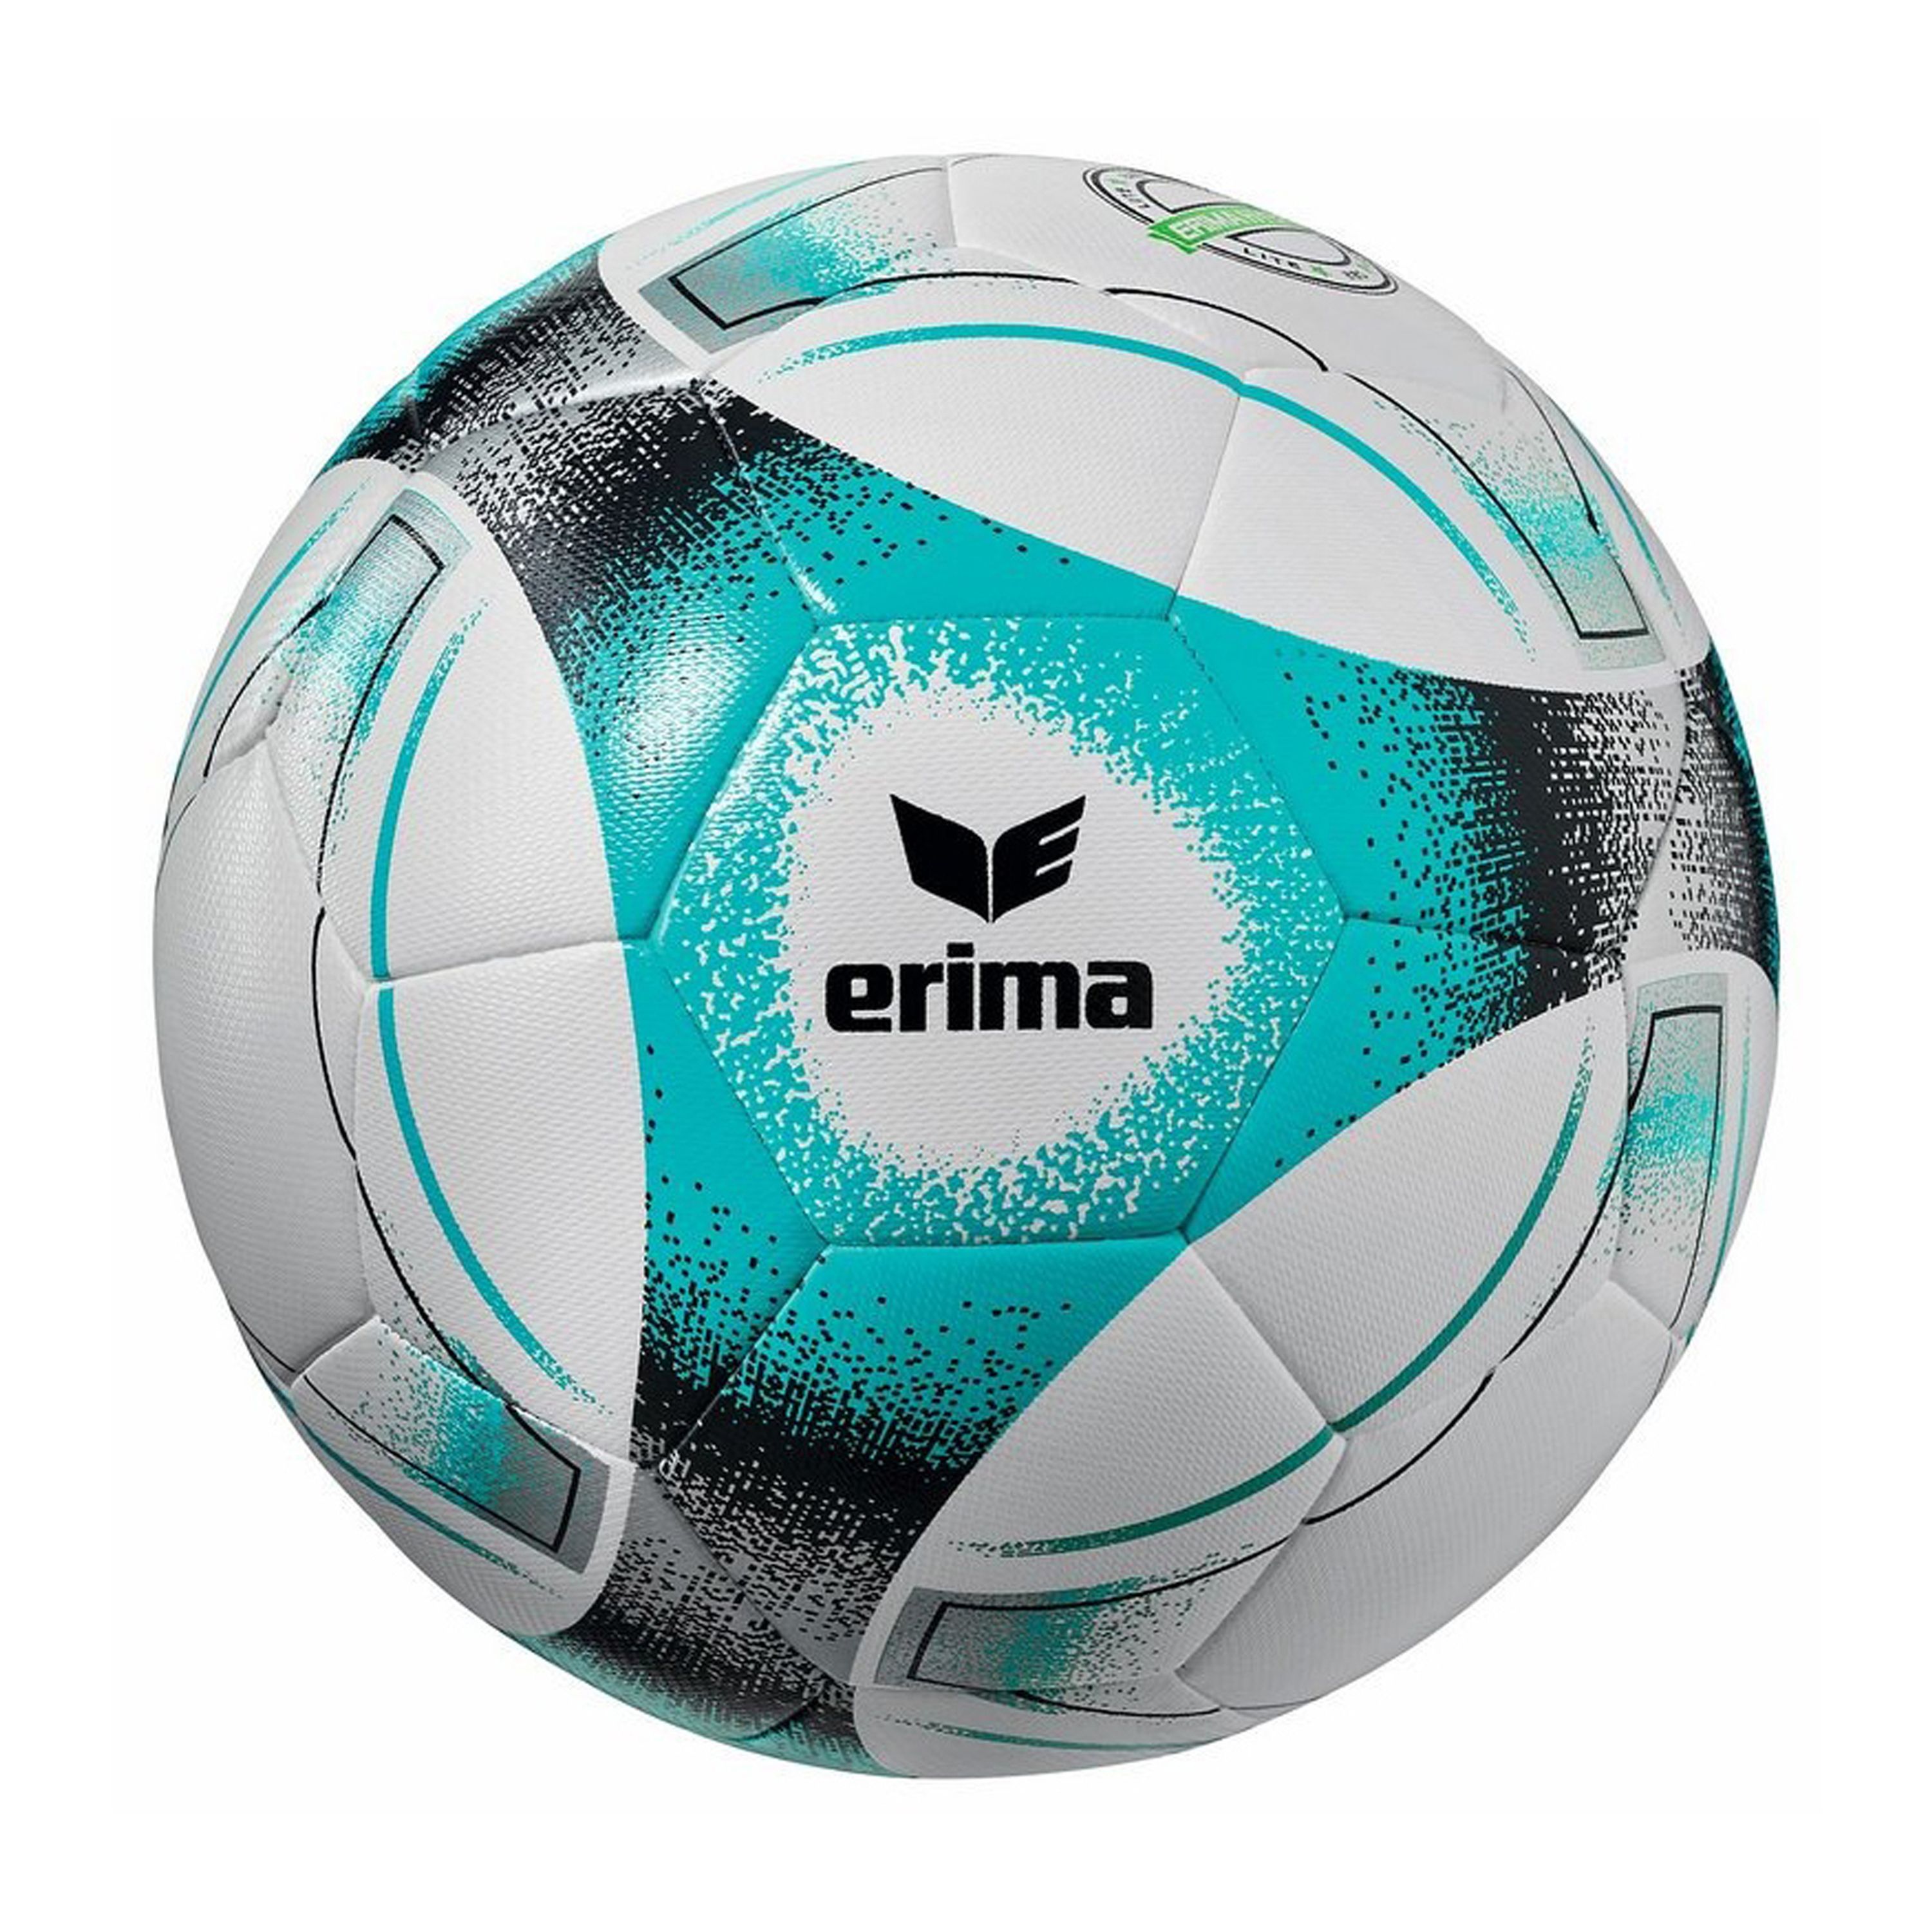 Erima Hybrid Lite 290 Voetbal product